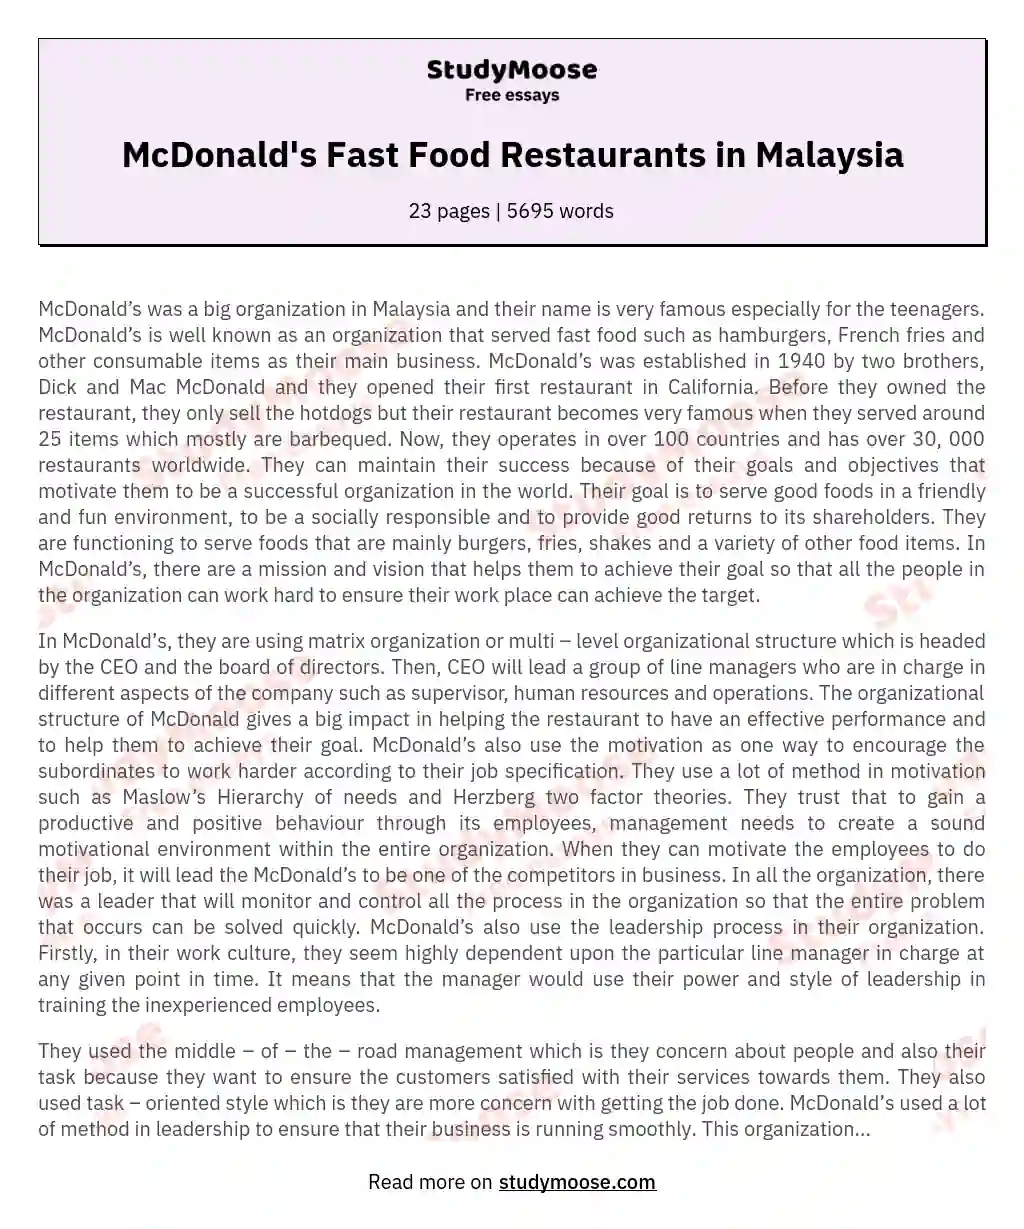 McDonald's Fast Food Restaurants in Malaysia